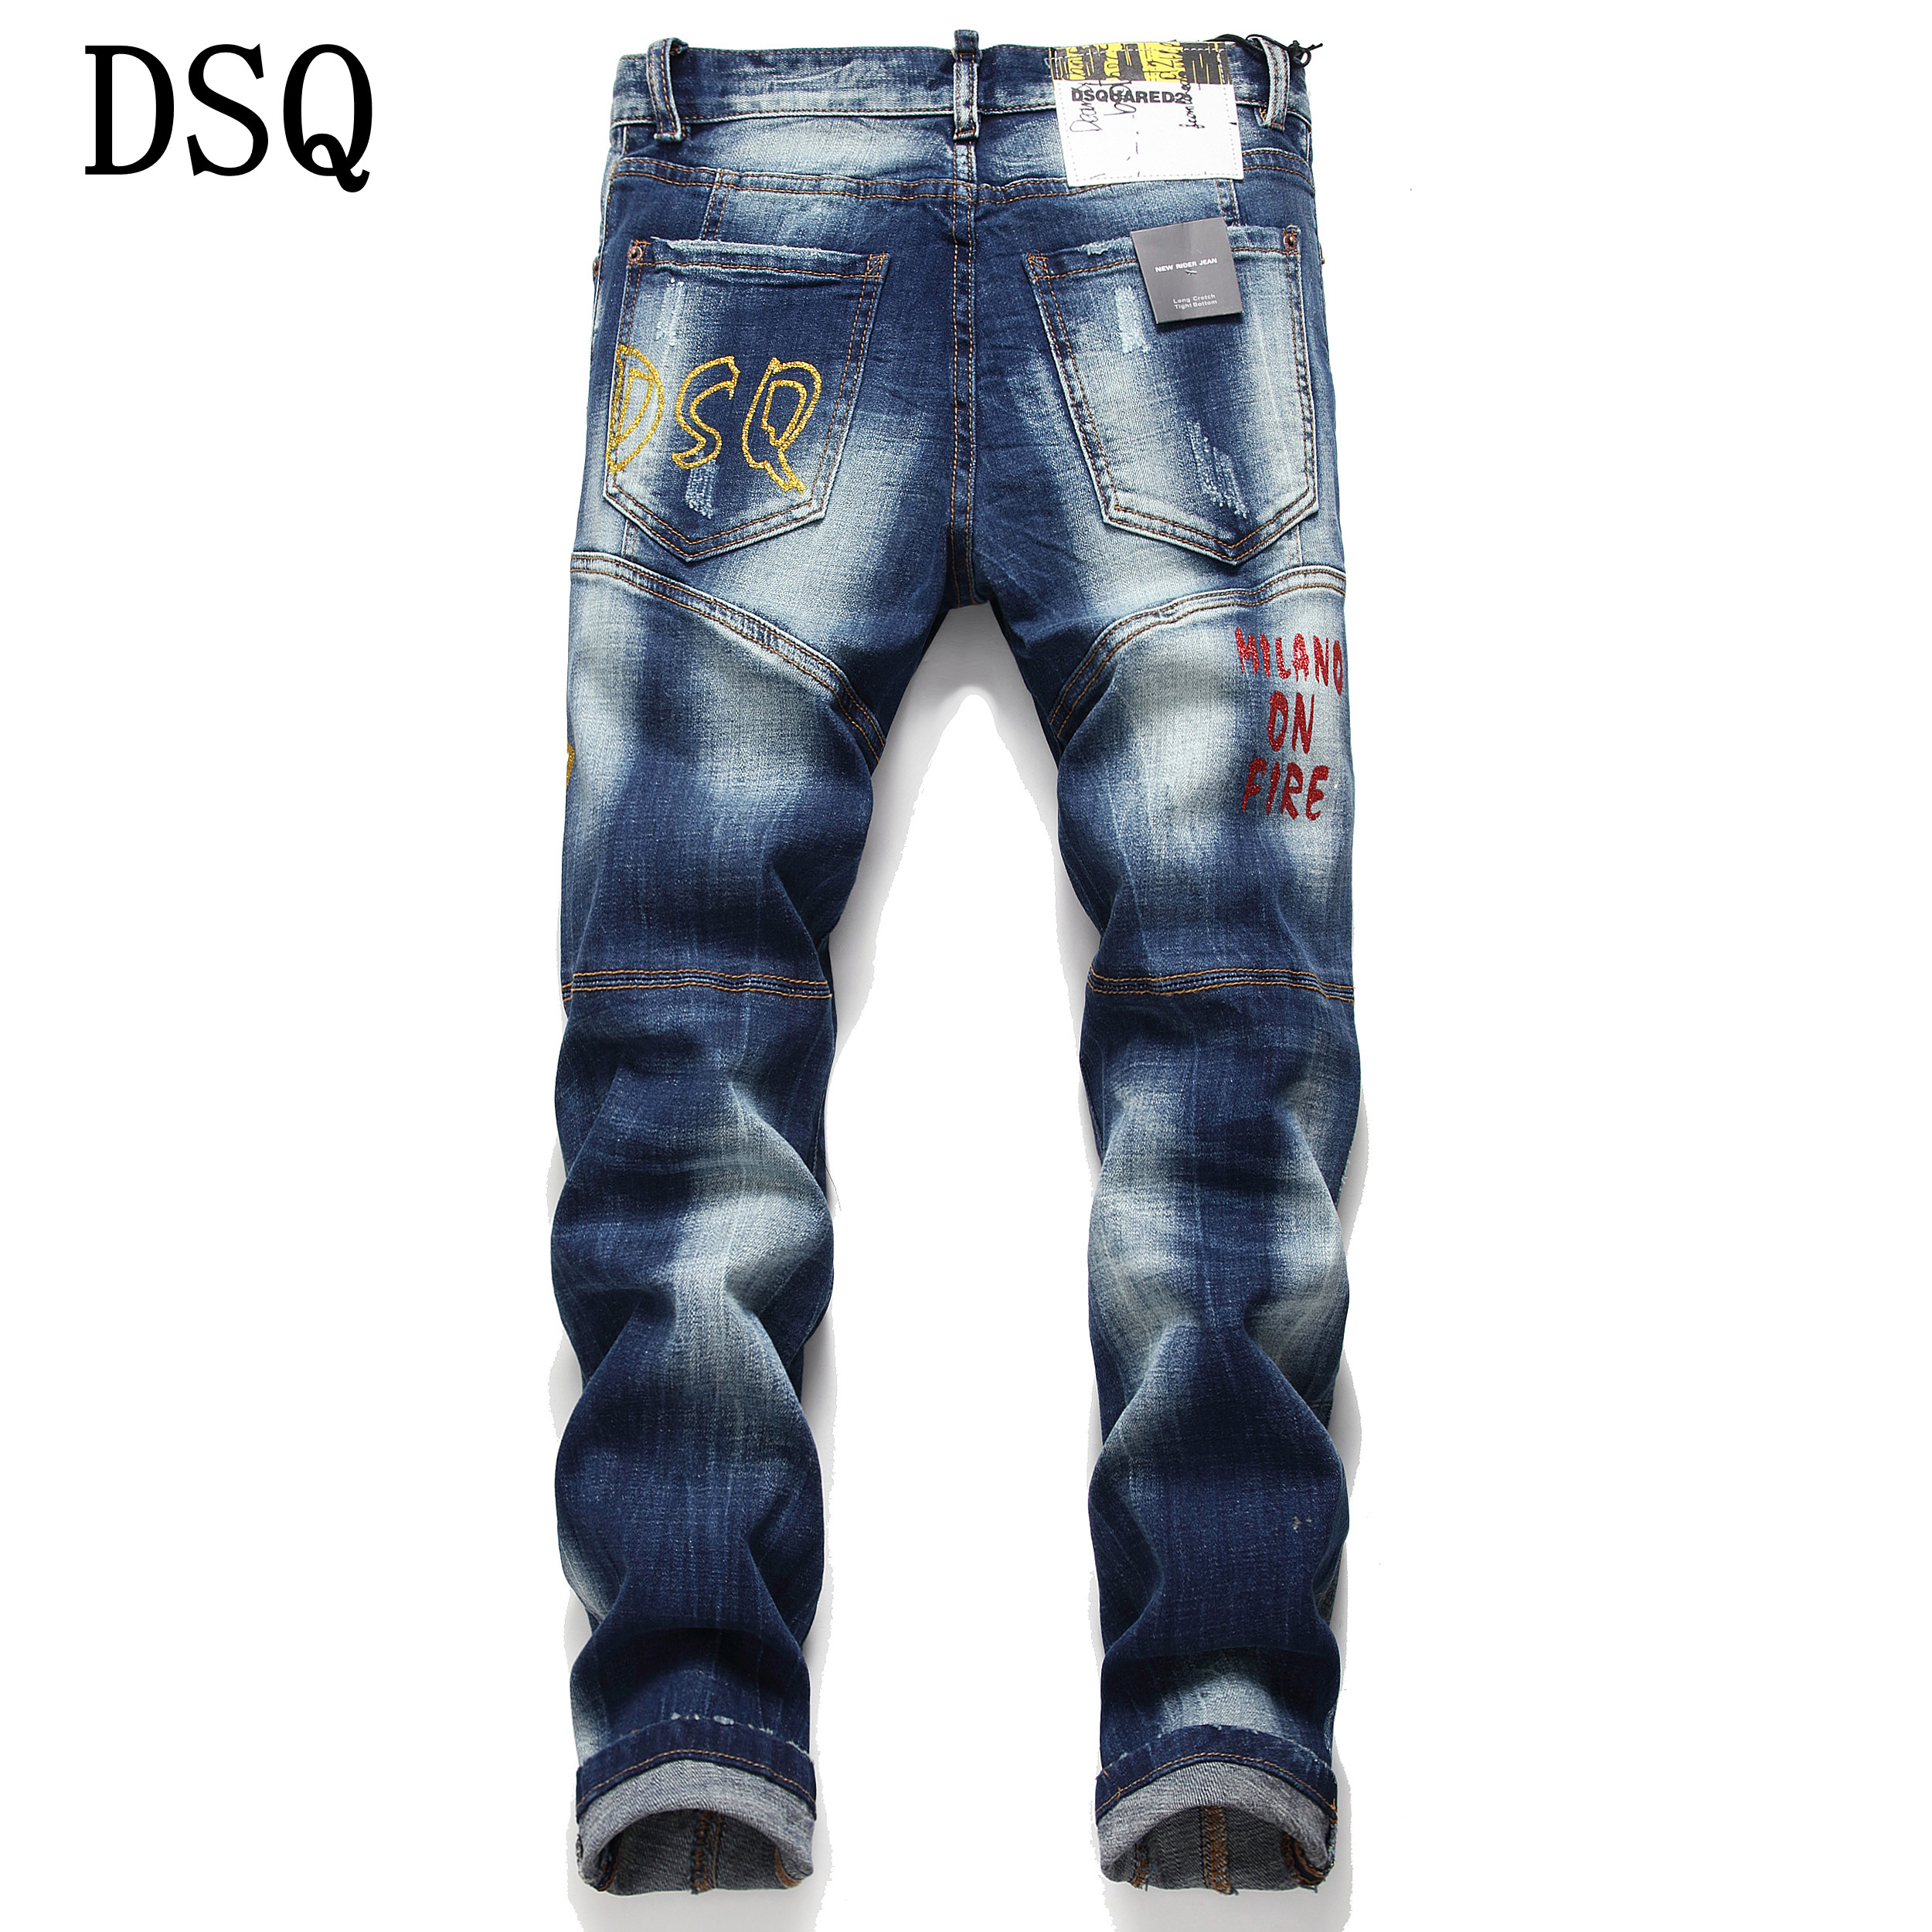 dsquared jeans online outlet